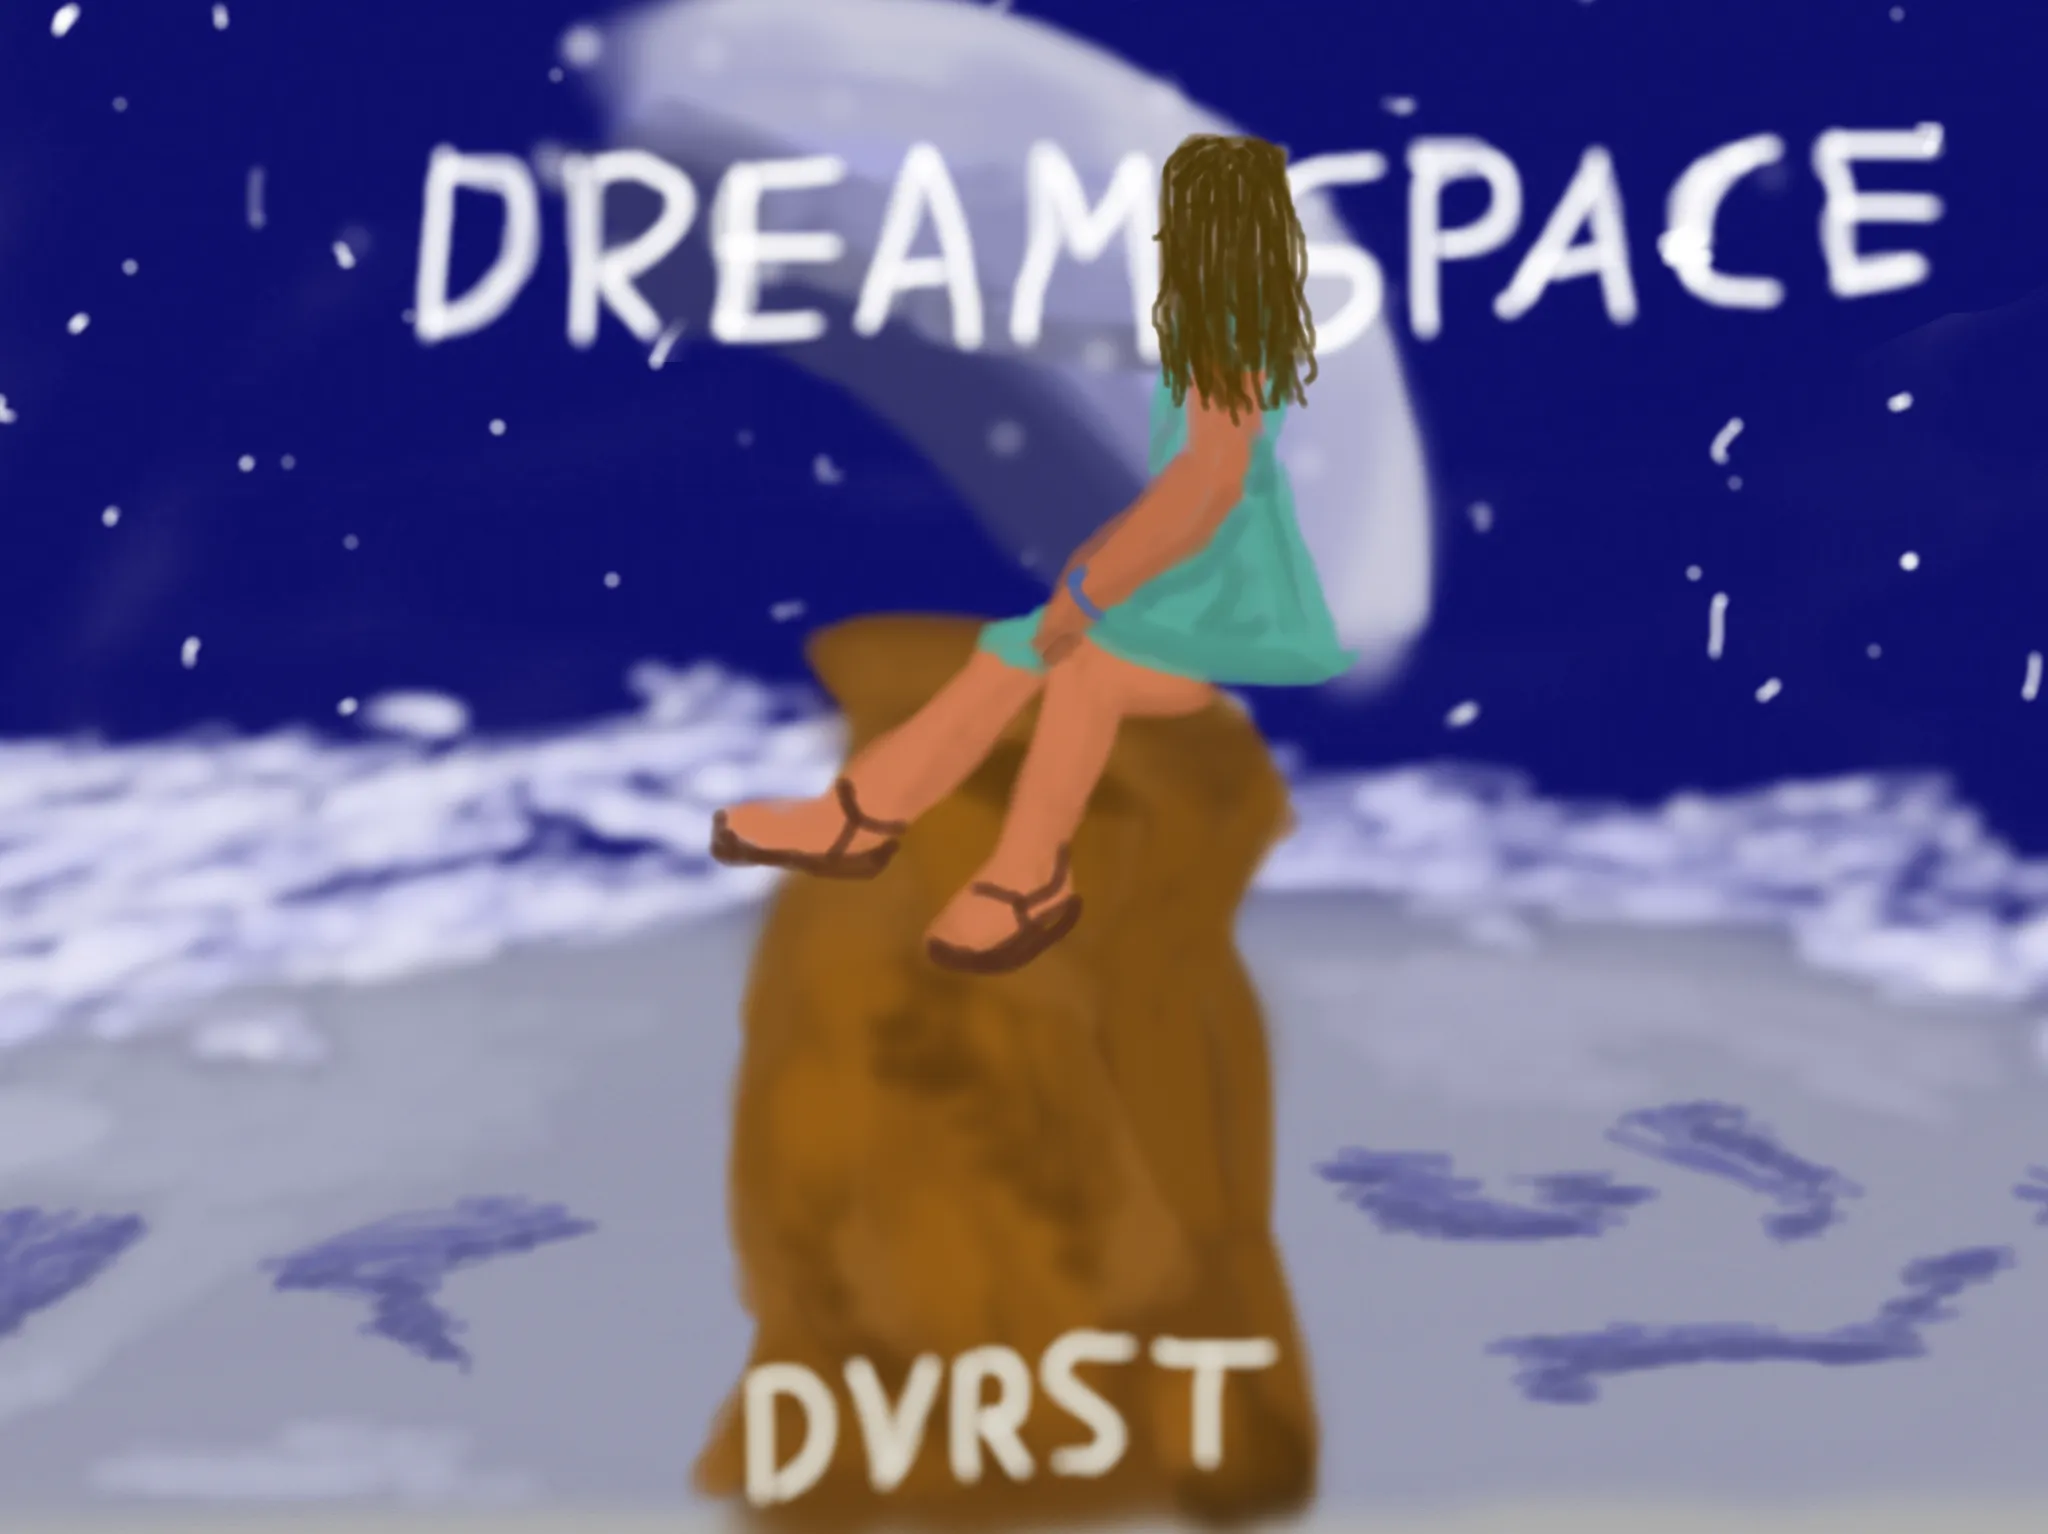 Dream space